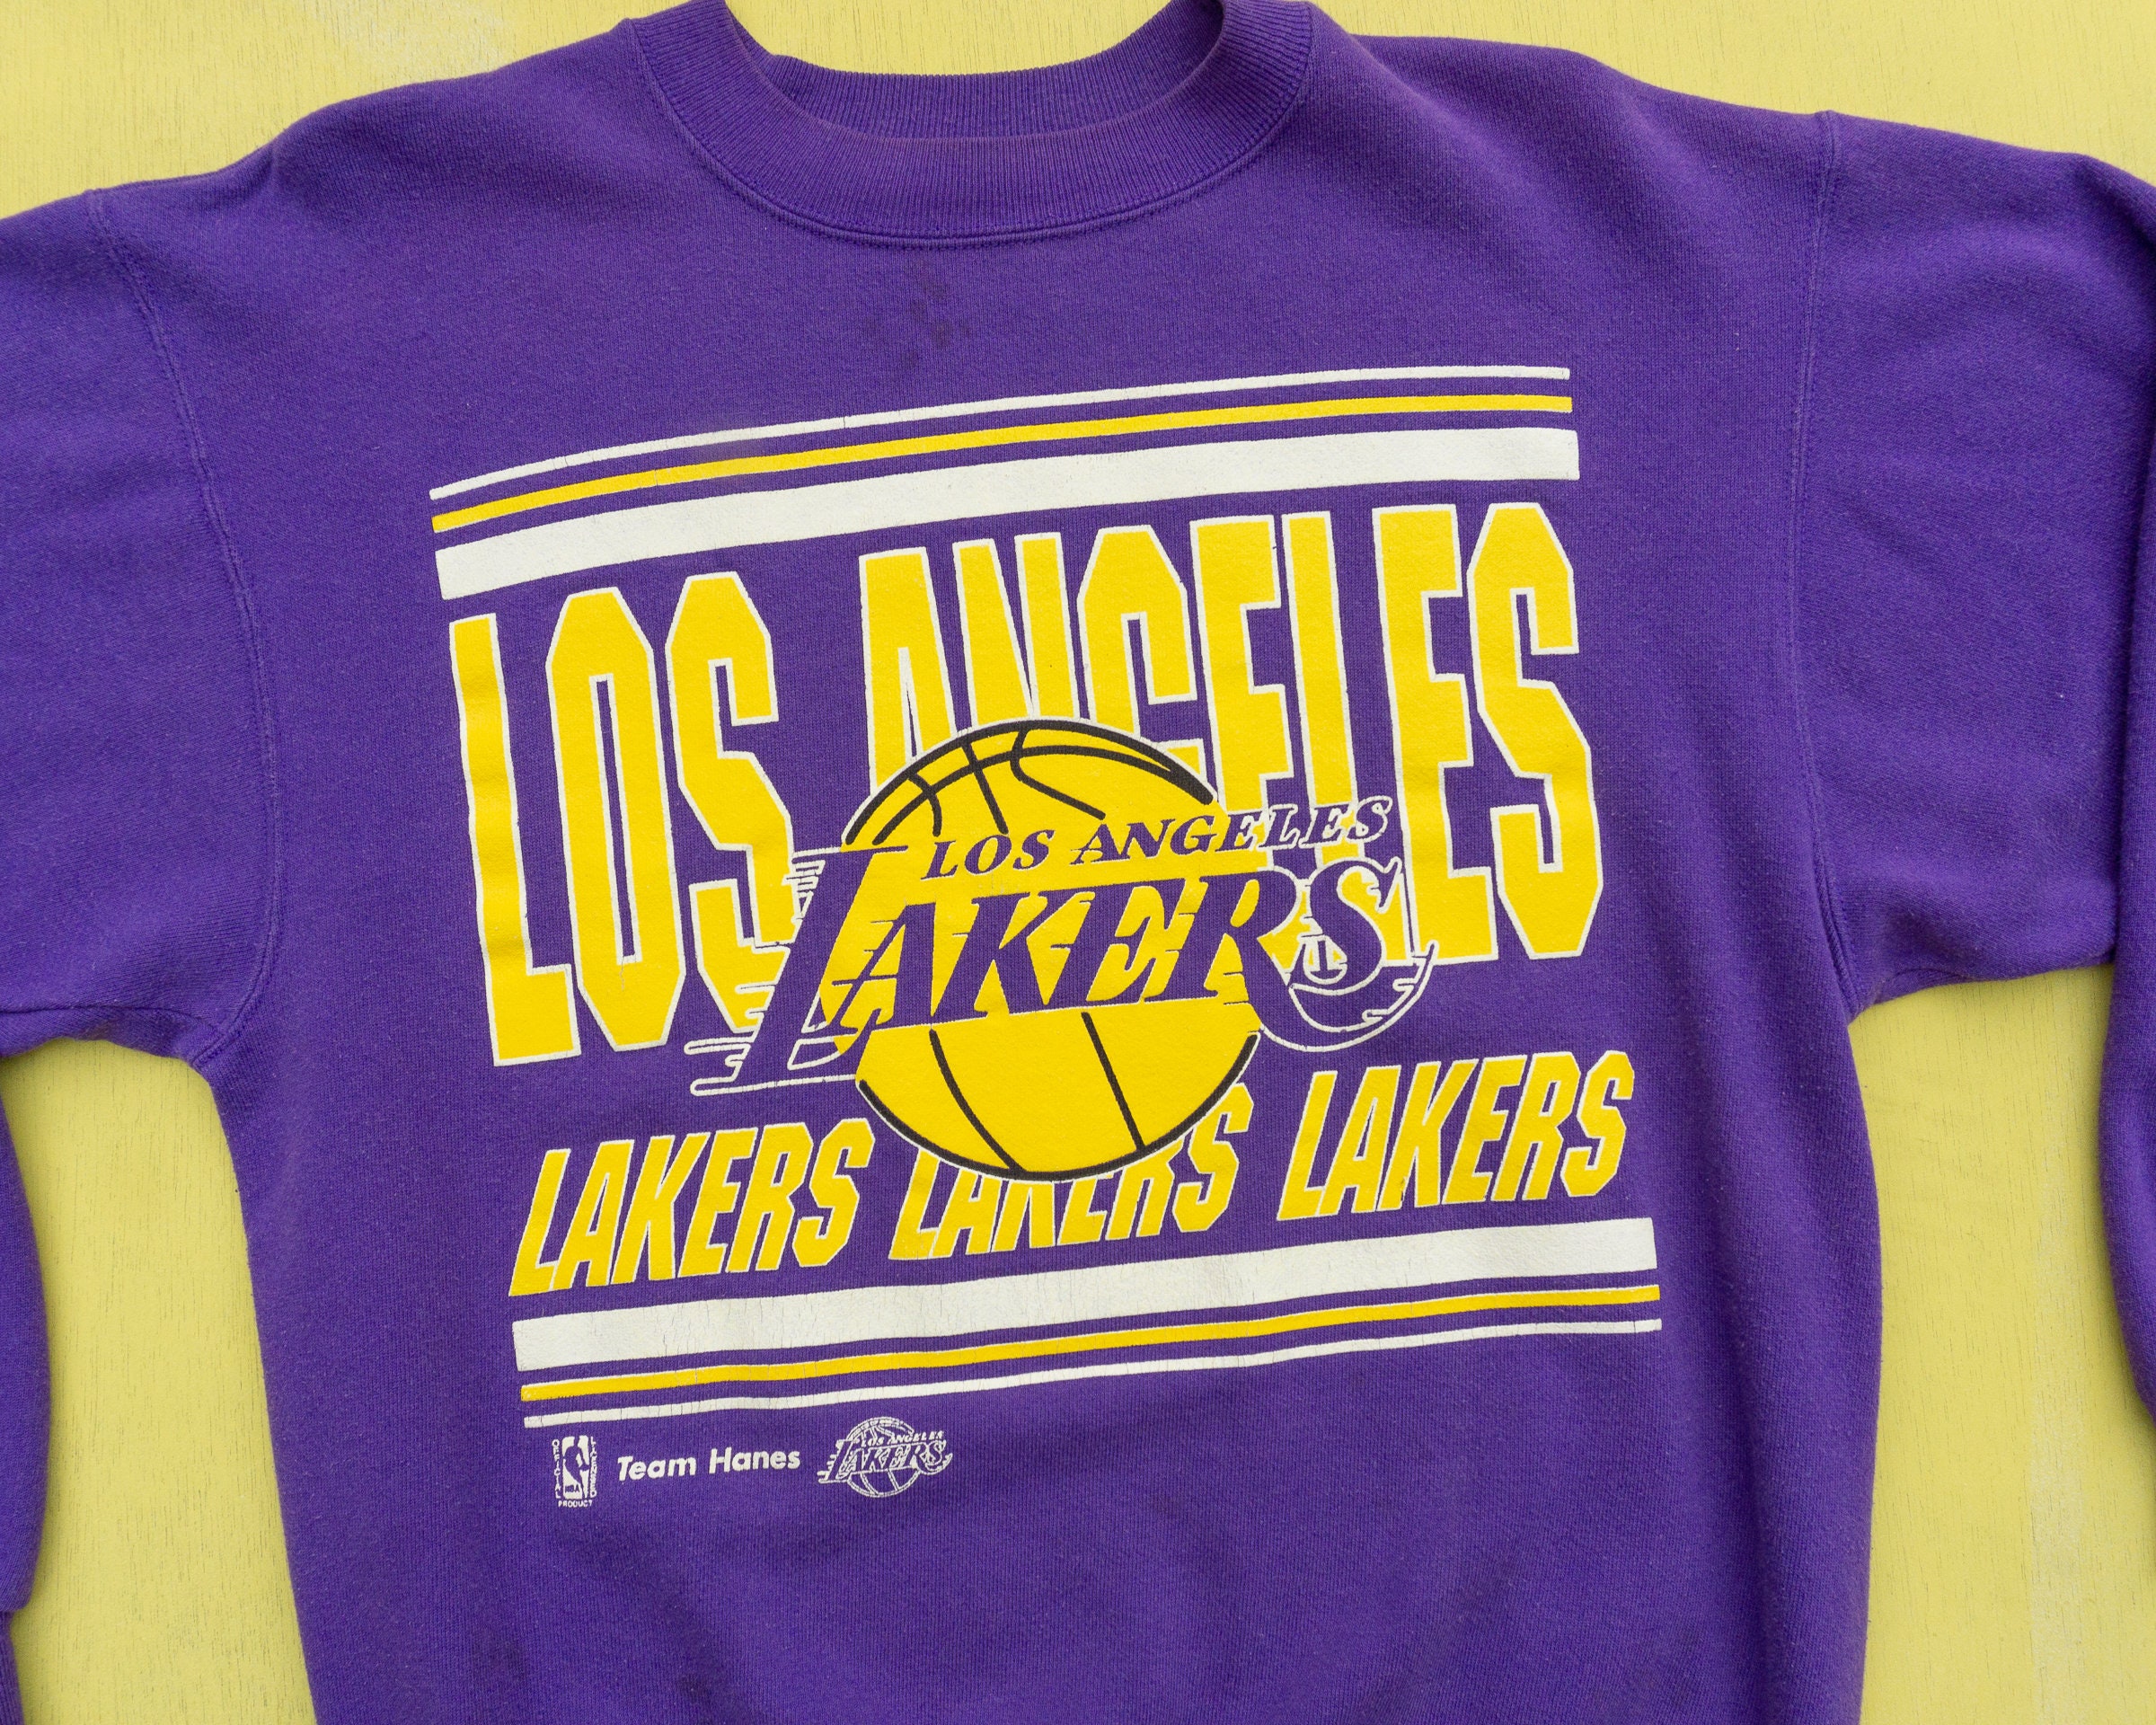 VTG Los Angeles LA Lakers NBA Tank Top Shirt Mens XL X-Large Nutmeg Mills  USA